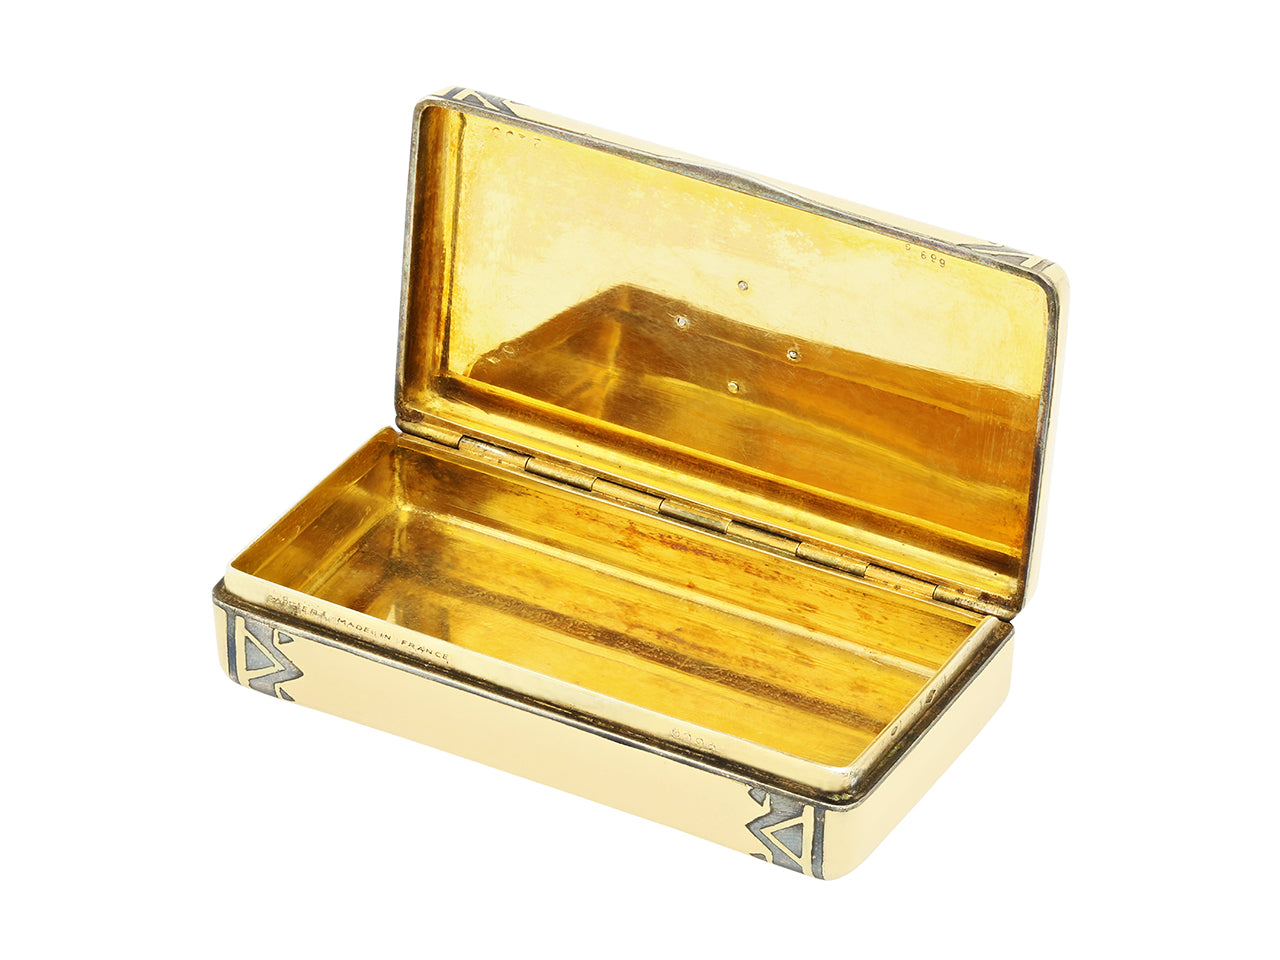 Cartier Art Deco Enamel Box in 18K and Silver